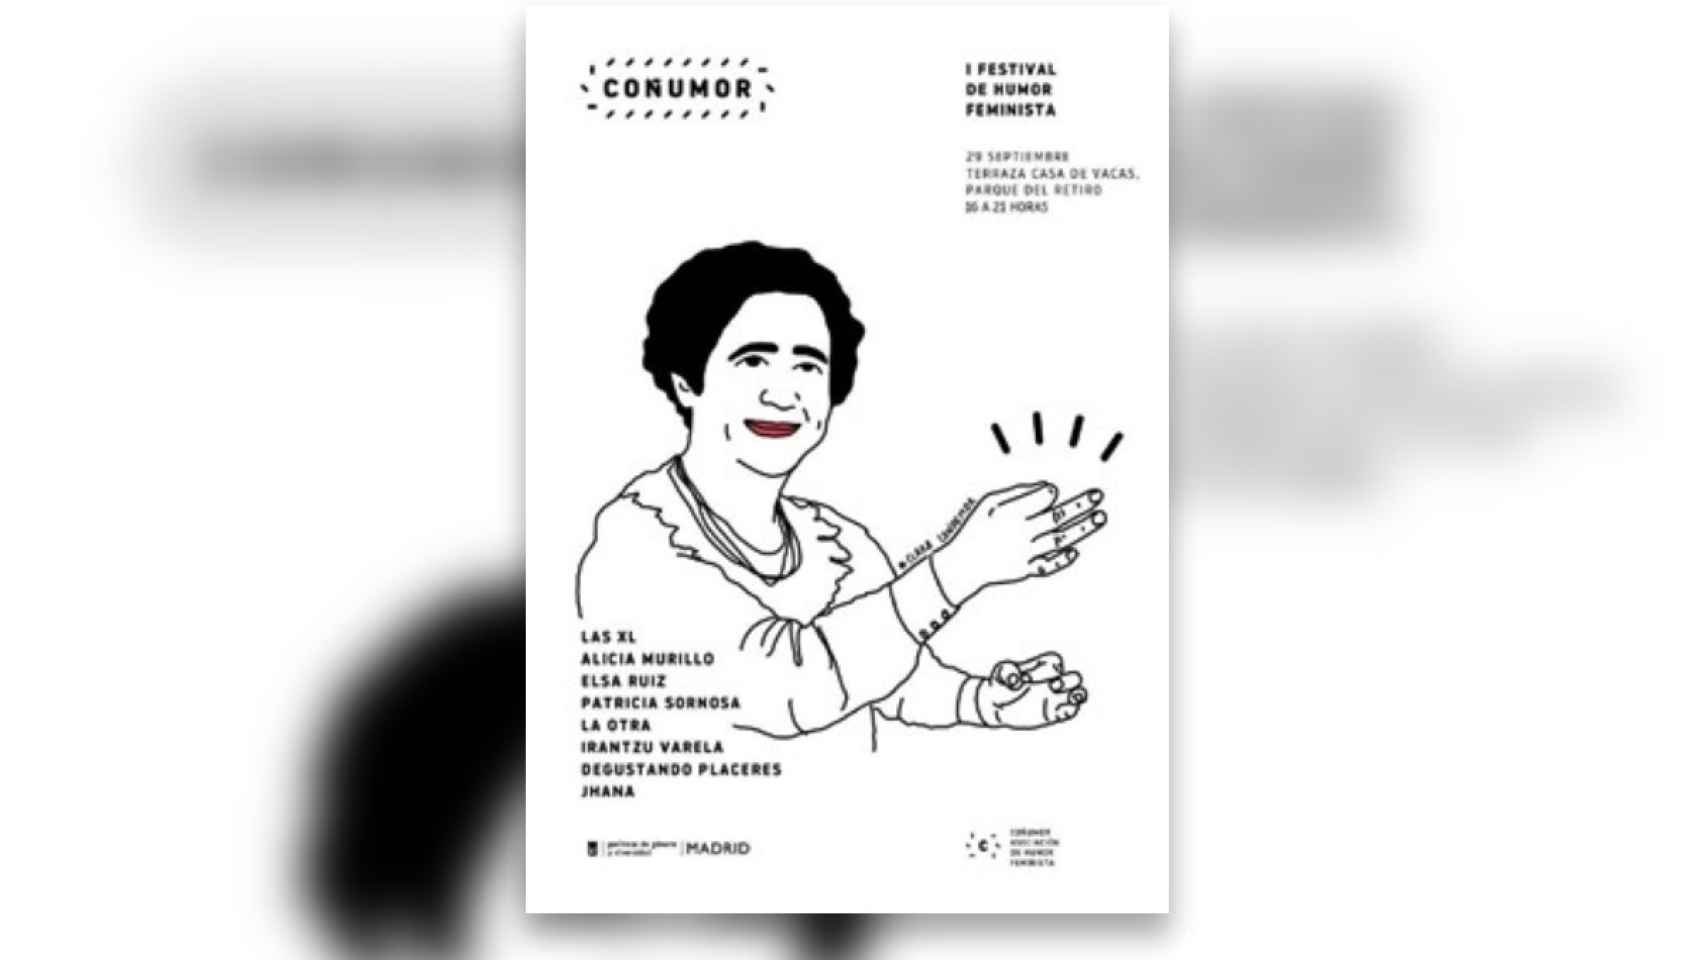 'Coñumor', primera festival de humor feminista